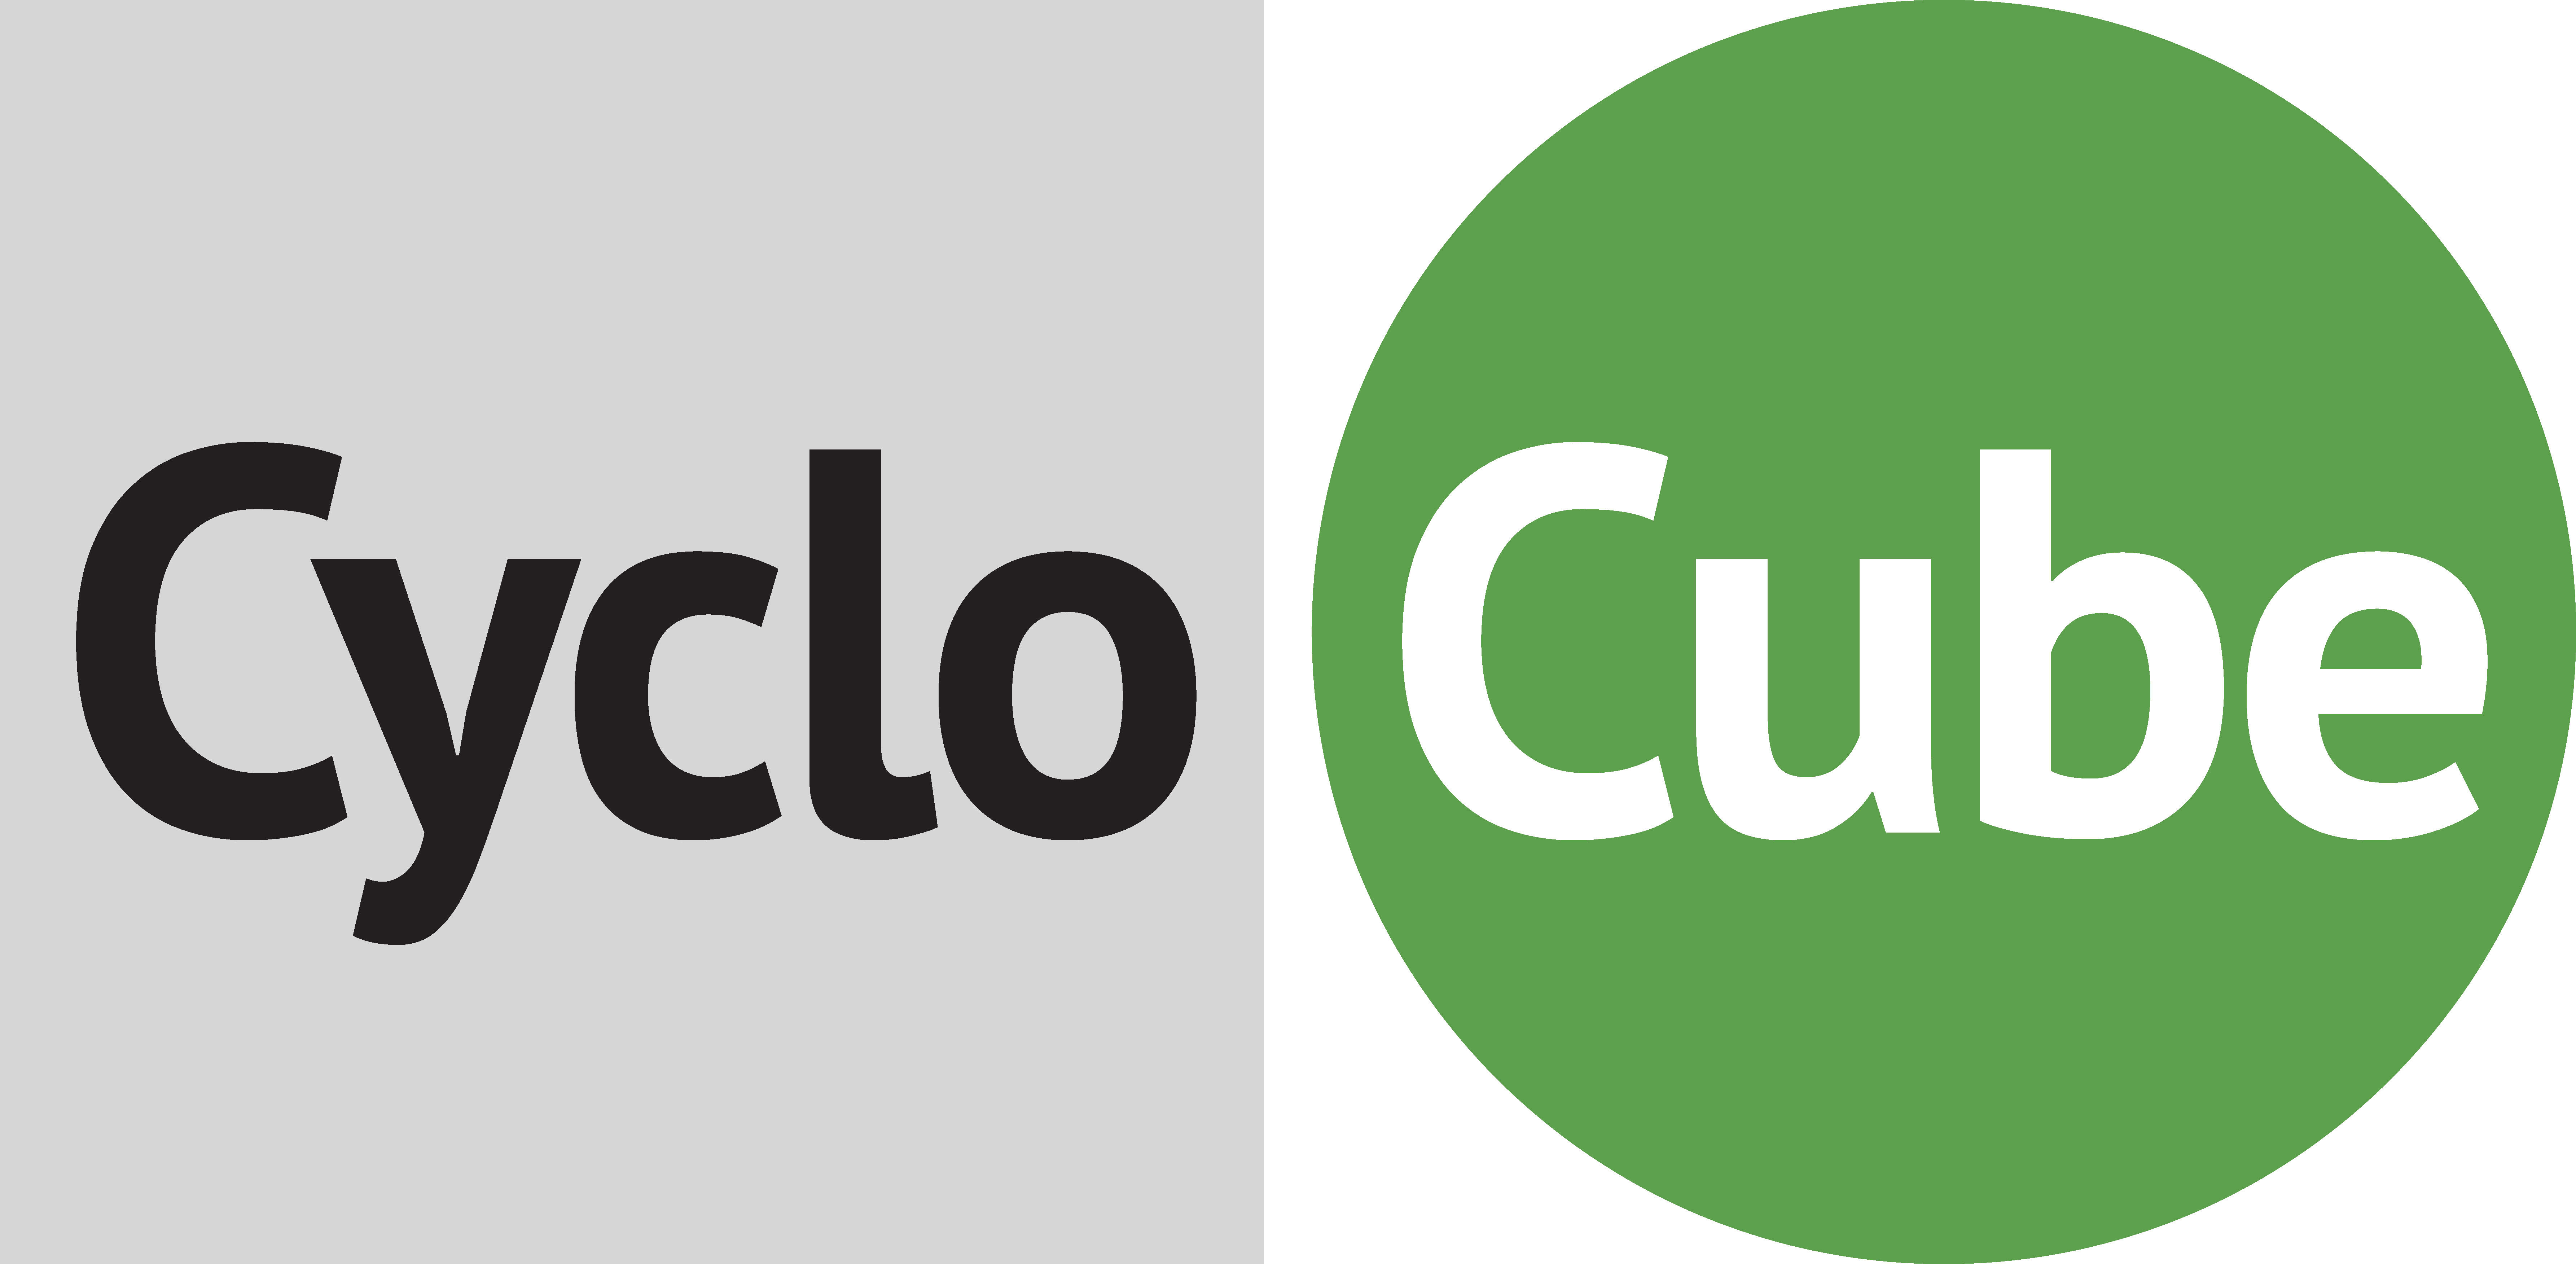 CC_logo.png